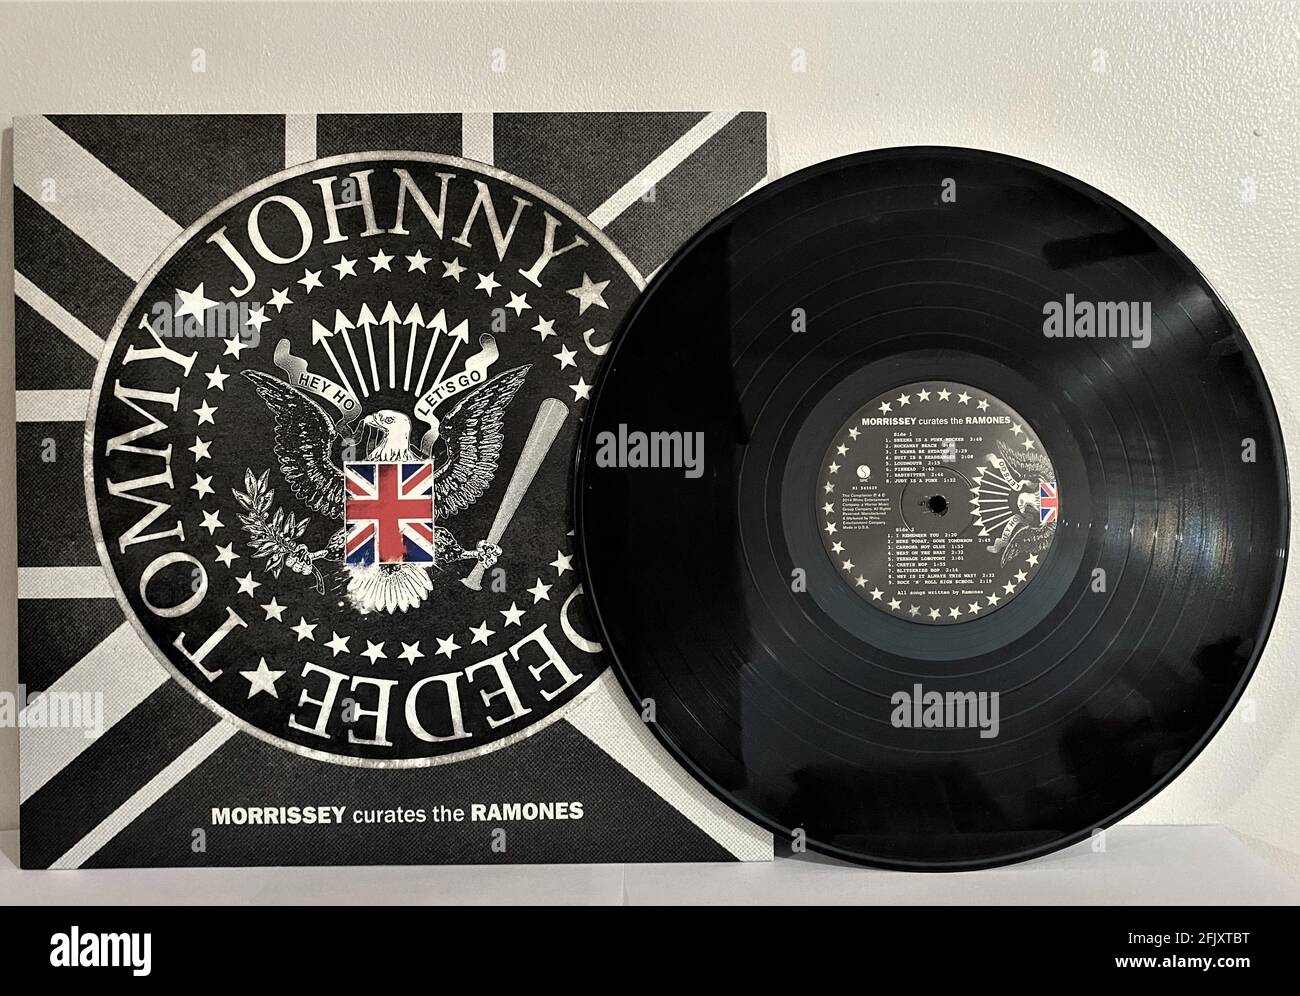 Punk rock band,The Ramones, music album on vinyl record LP disc. Stock Photo